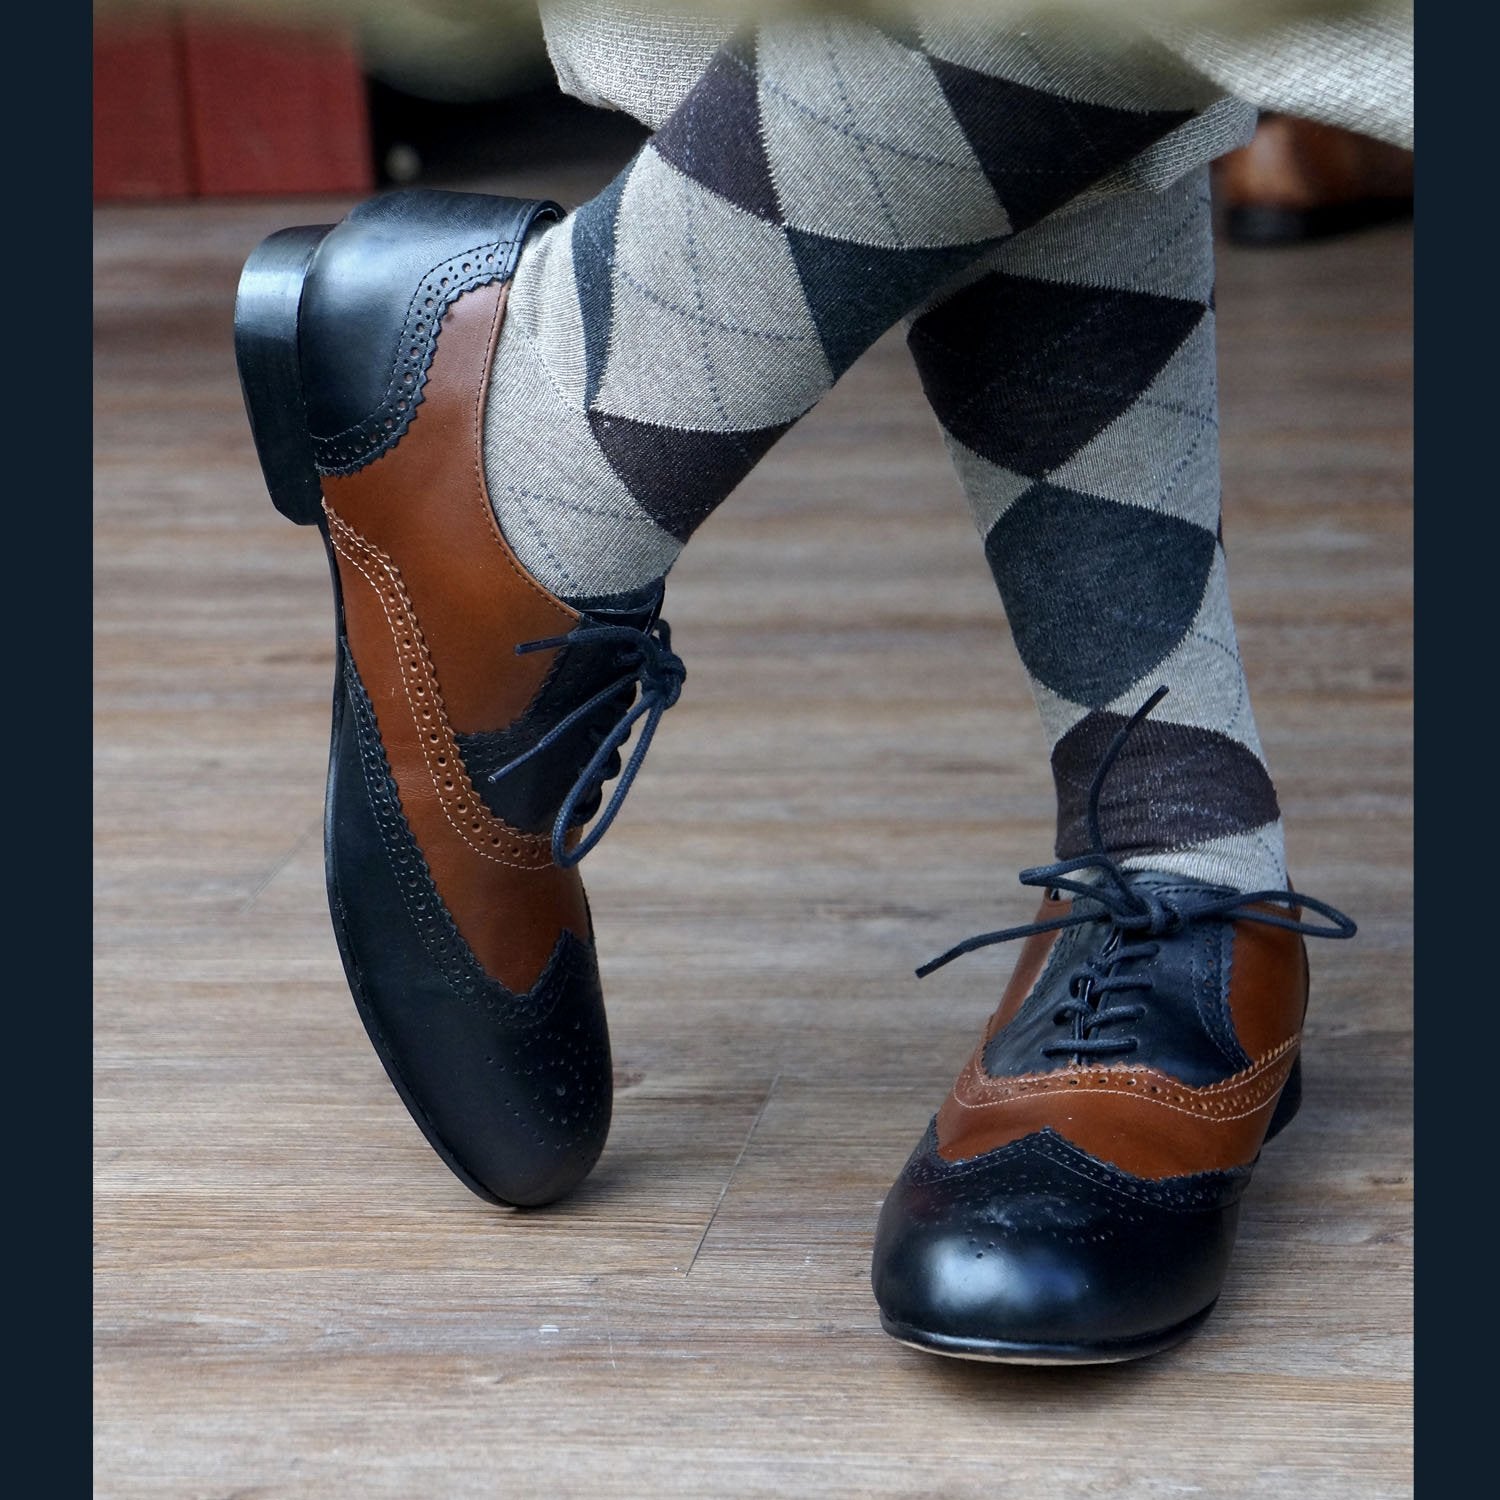 Men's black and brown wingtips and vintage socks